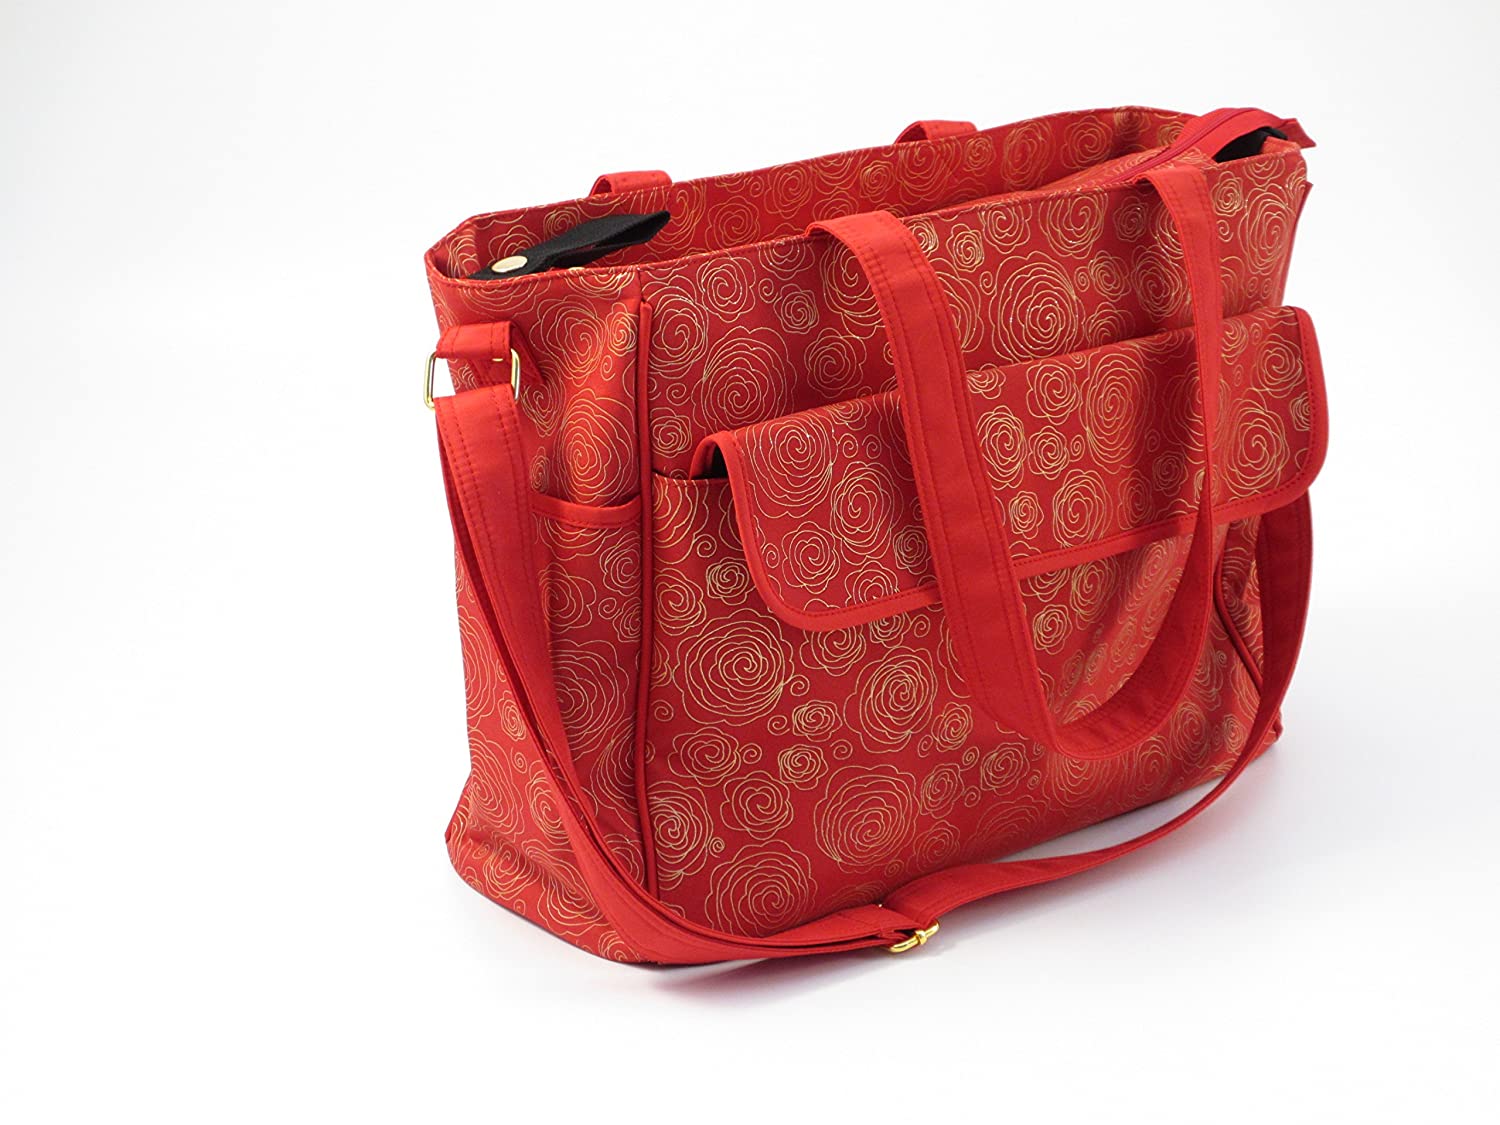 Summer Infant Messenger Changing BAG Diaper Bags Red Gold Swirl